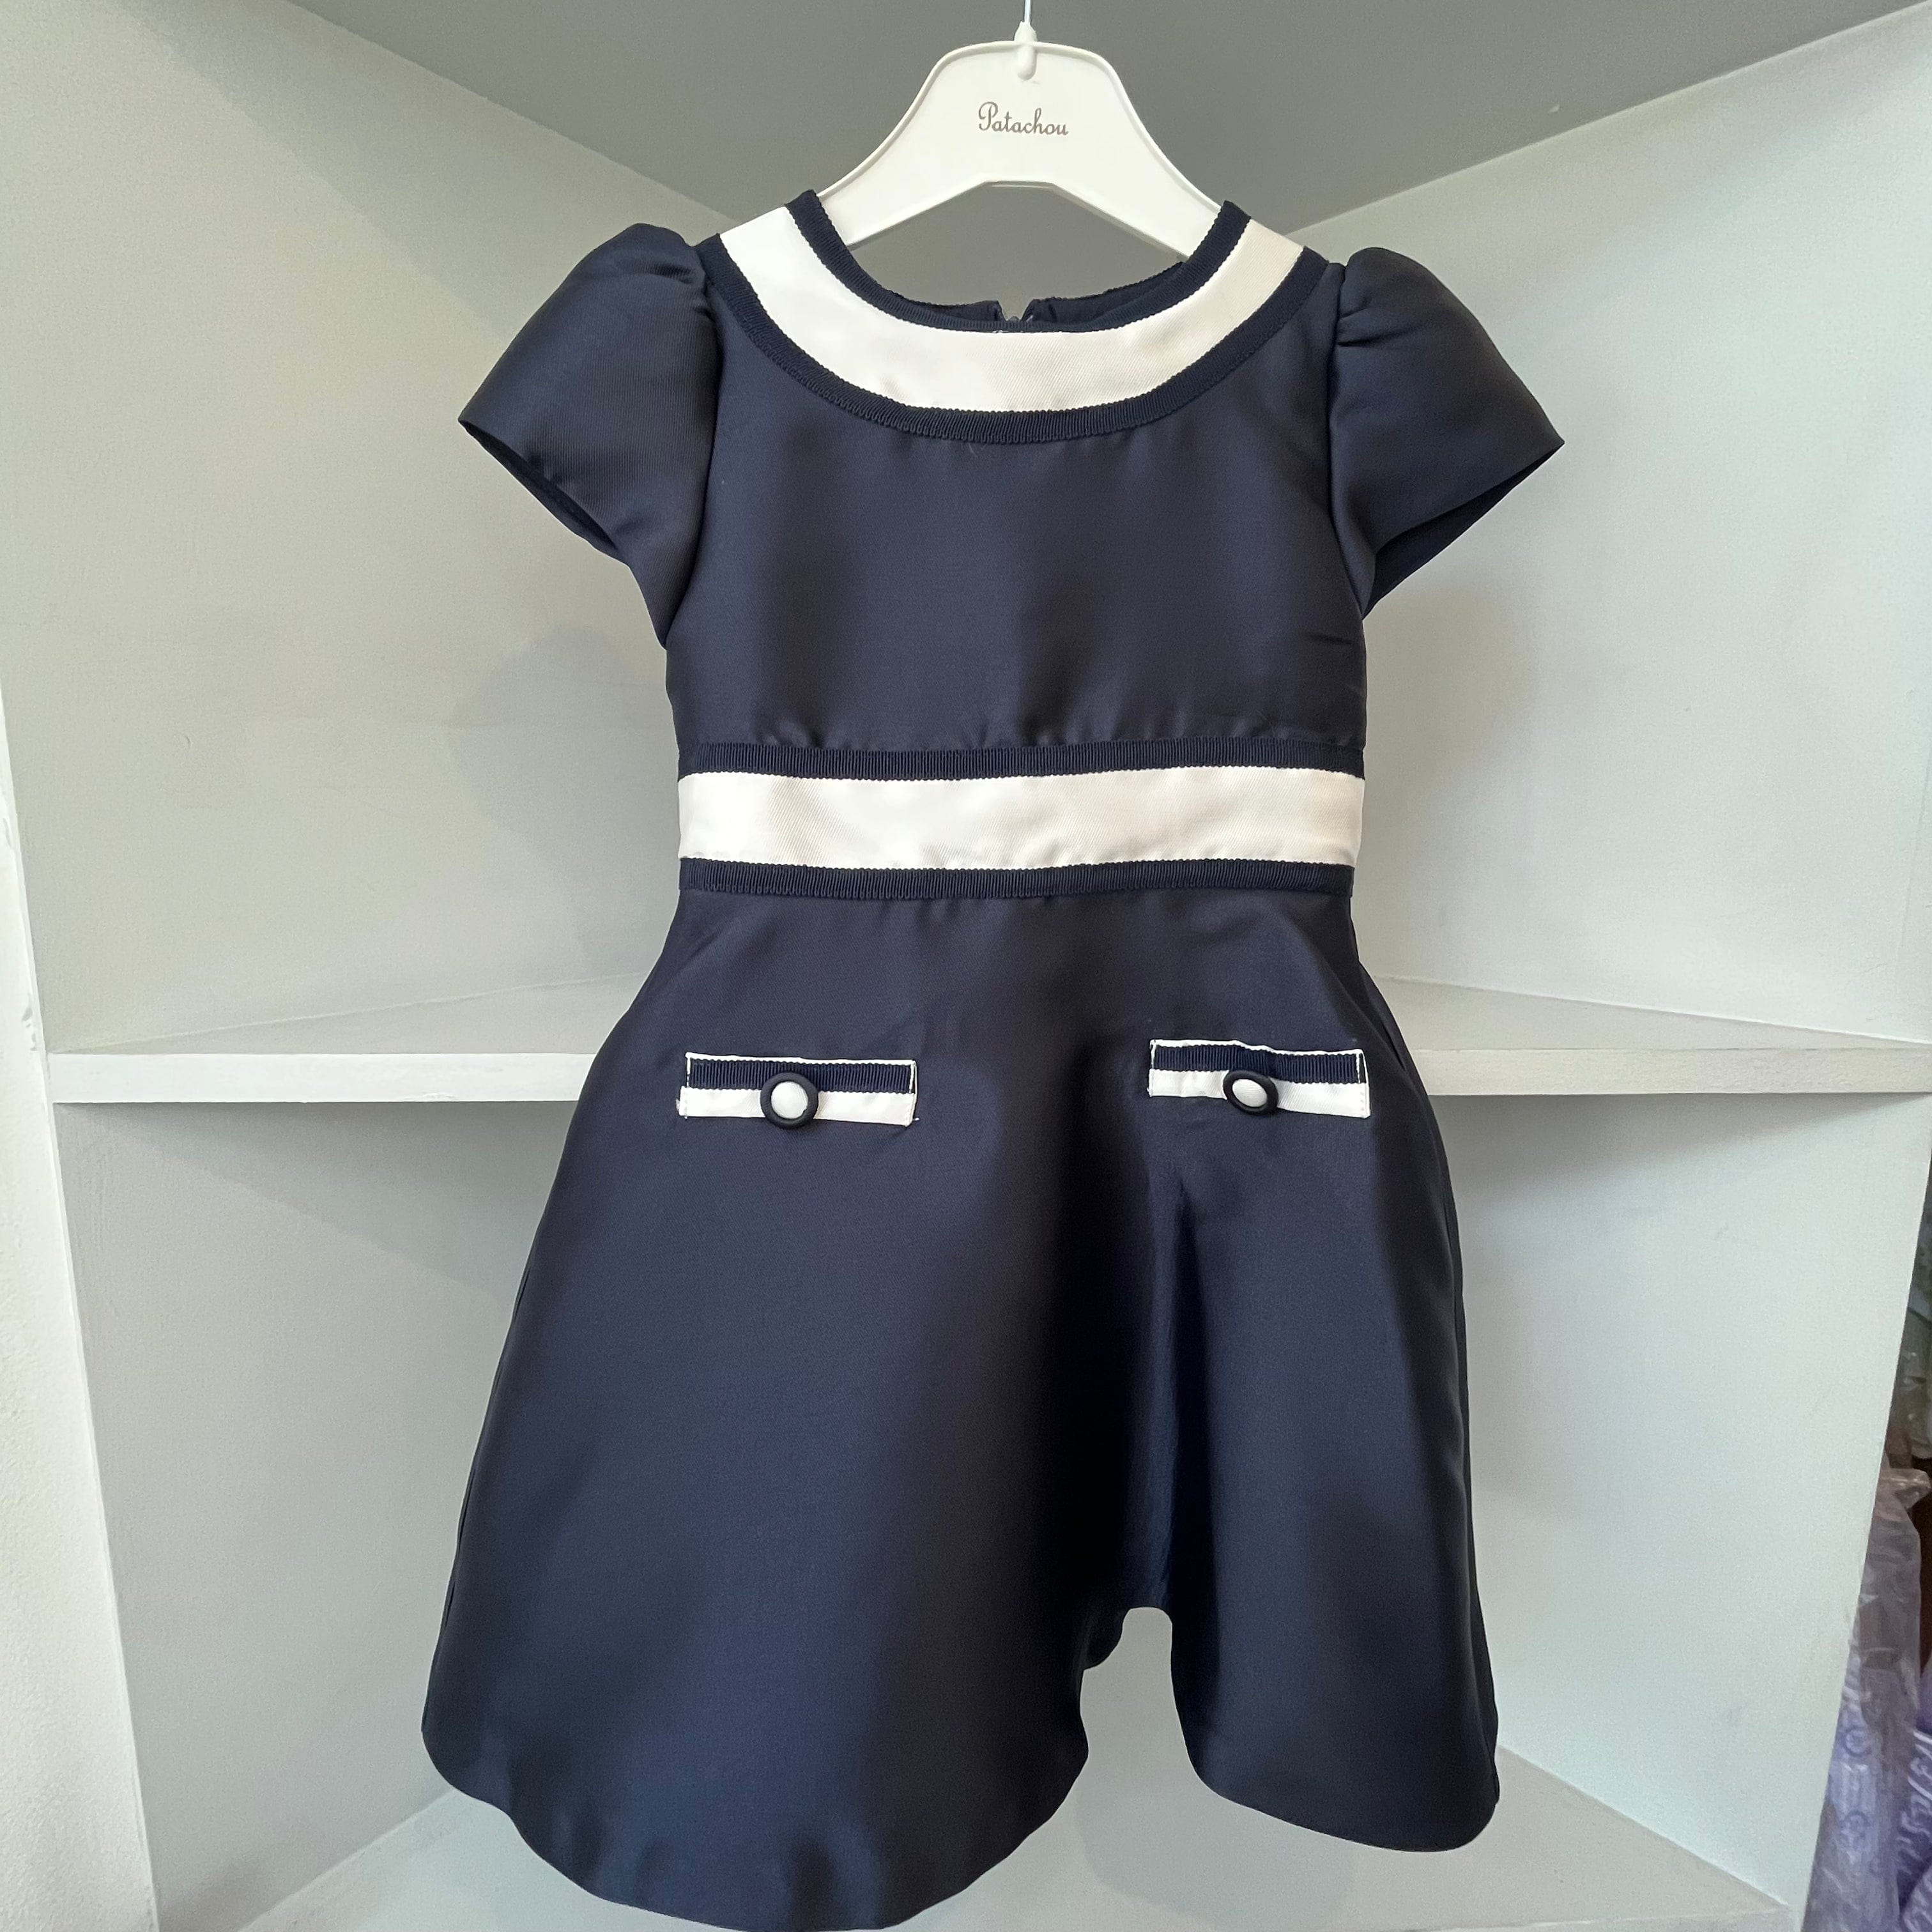 PATACHOU - Girls Satin Dress - Navy